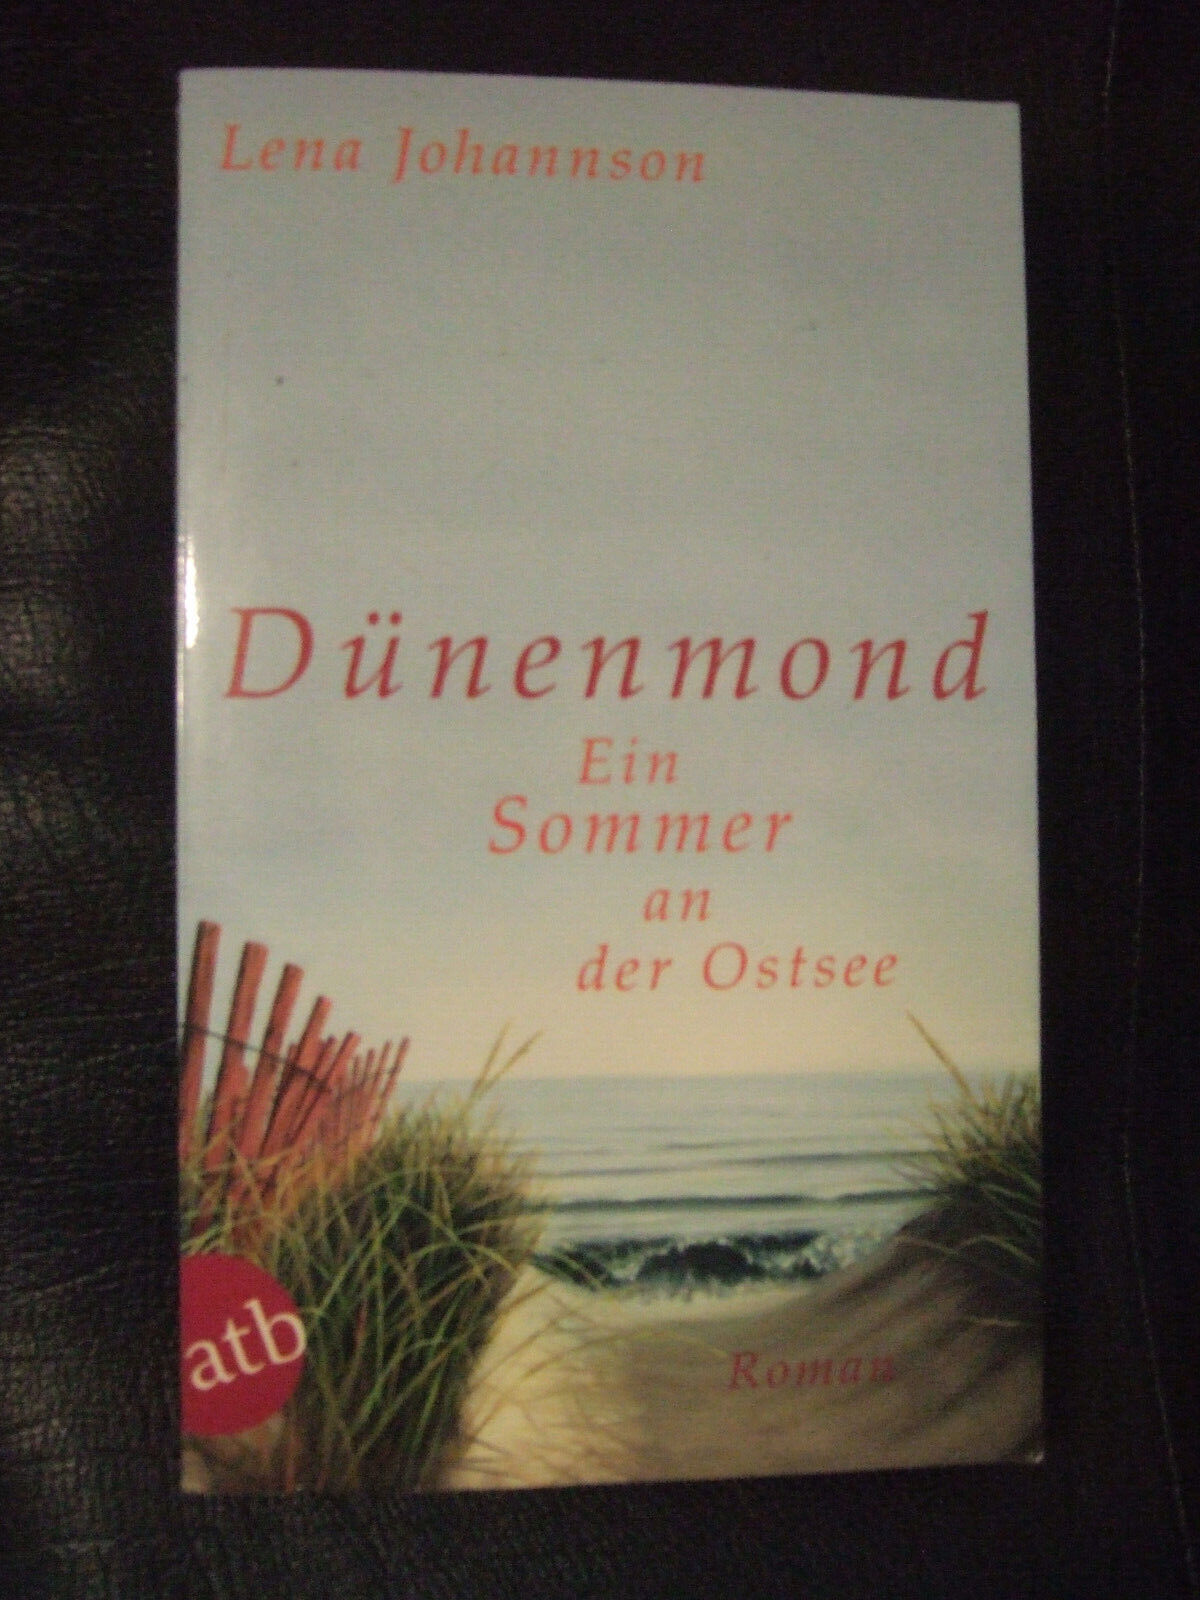 Dünenmond - Ein Sommer an der Ostsee - Lena Johannson